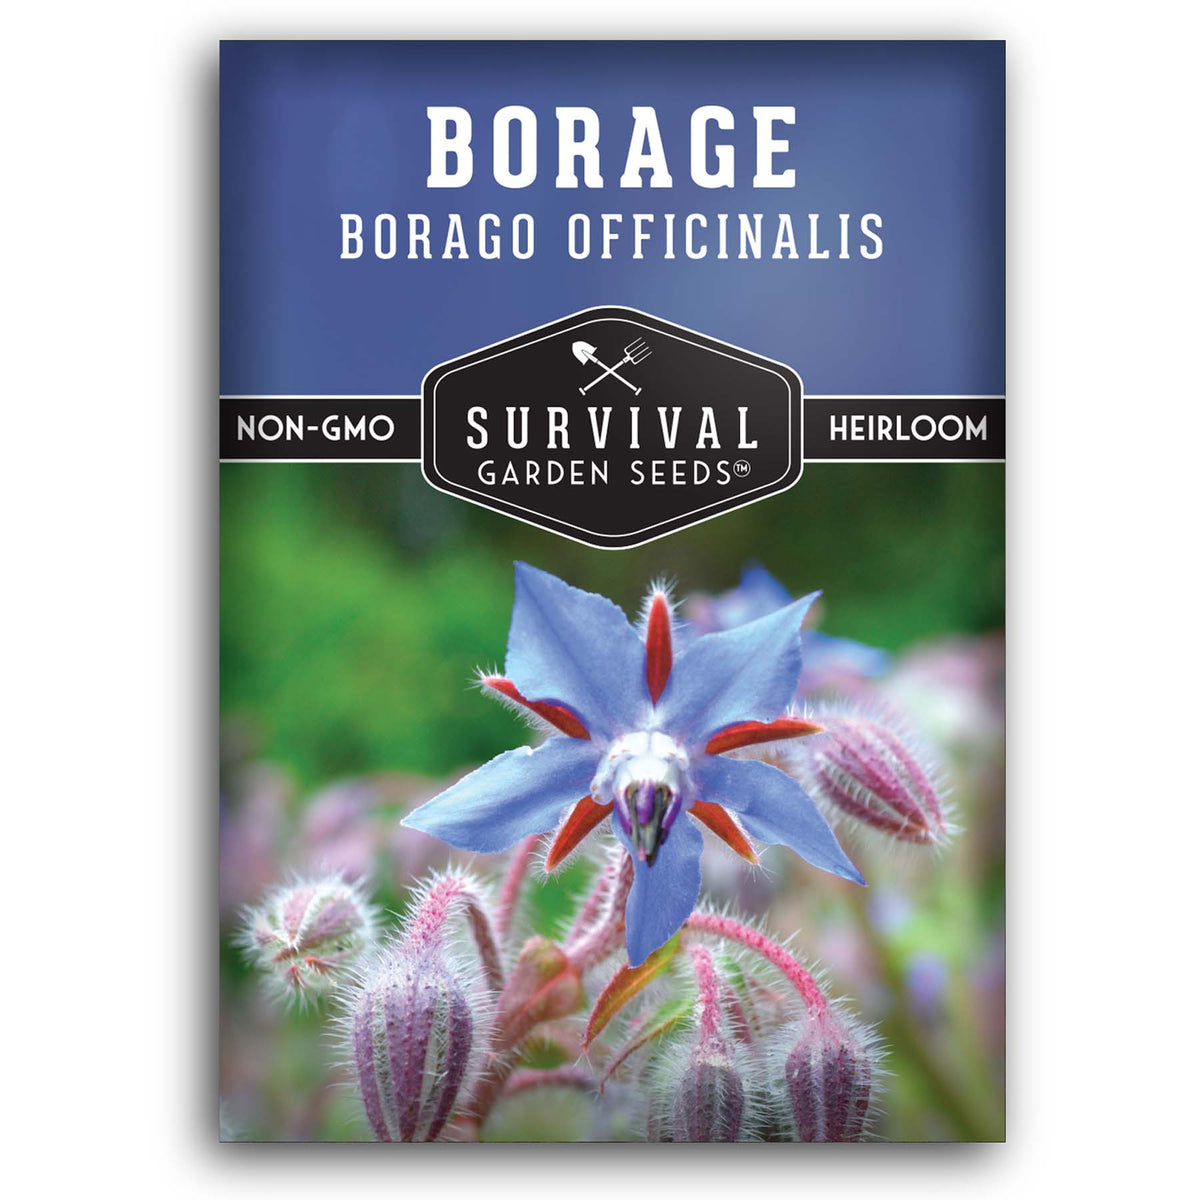 Borage seeds for planting